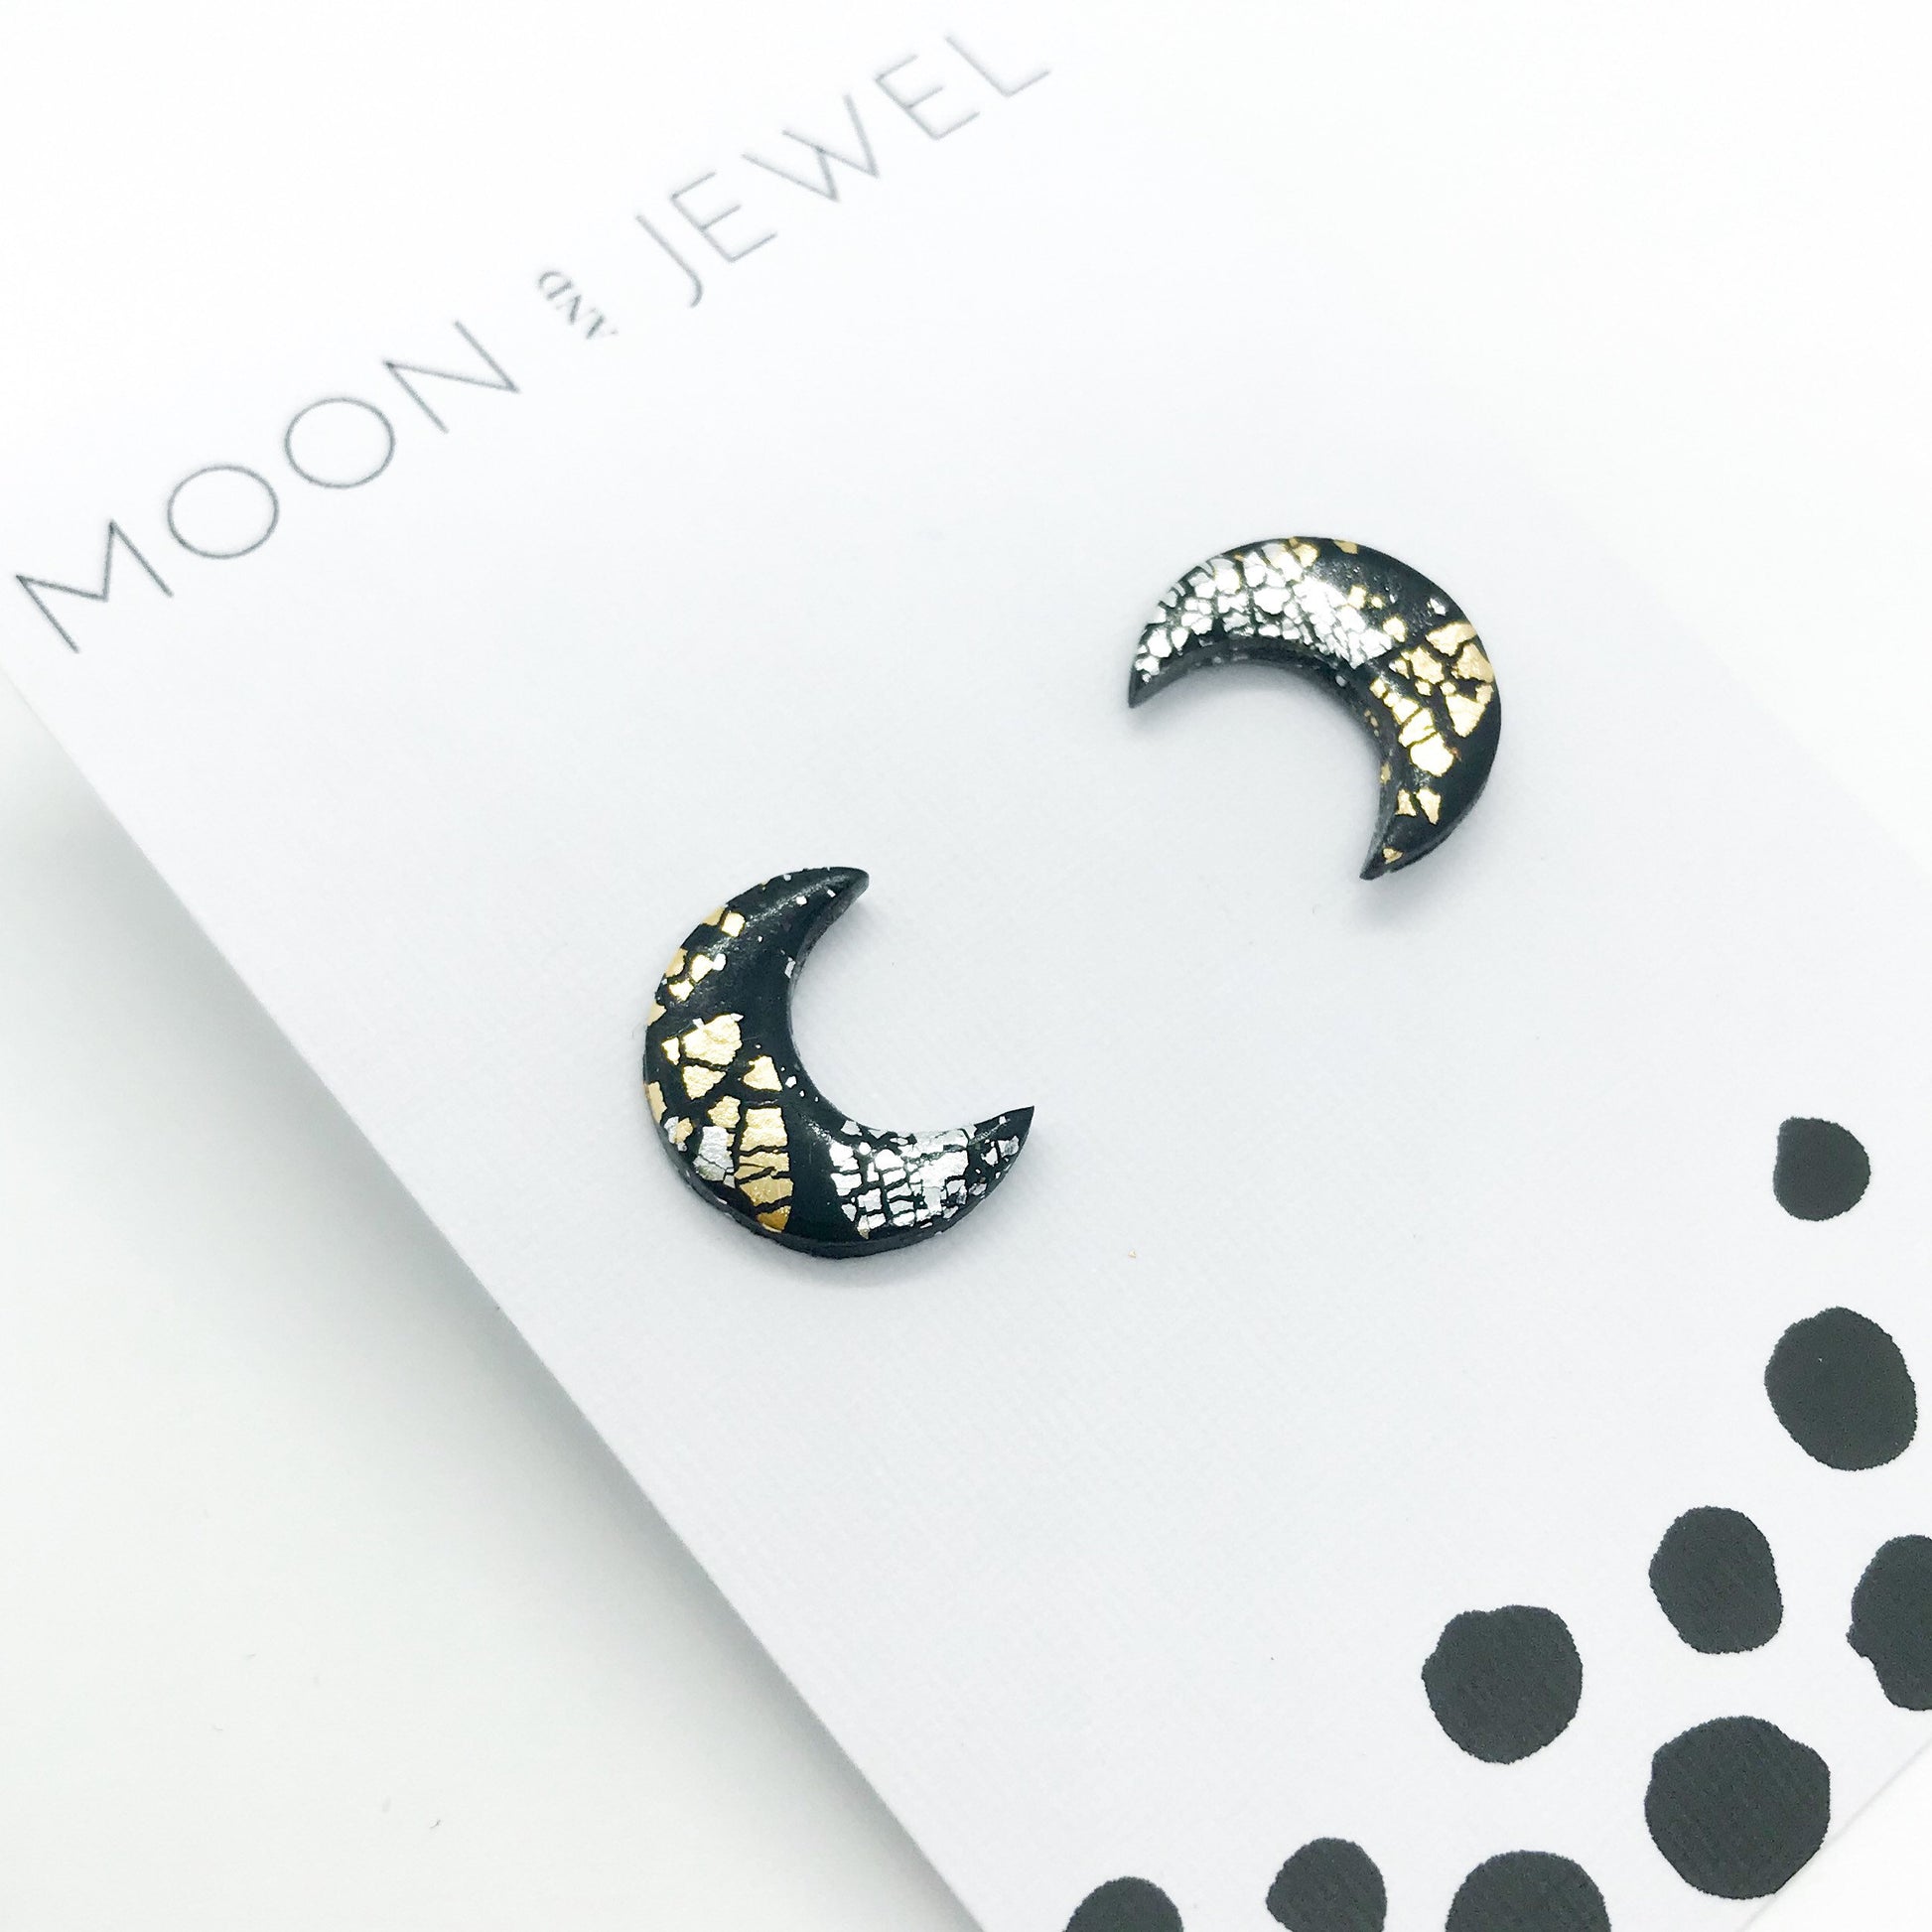 Moon earrings, polymer clay moon studs, black and metallic leaf handmade earrings, beautiful gift for her, birthday gift, girlfriend gift